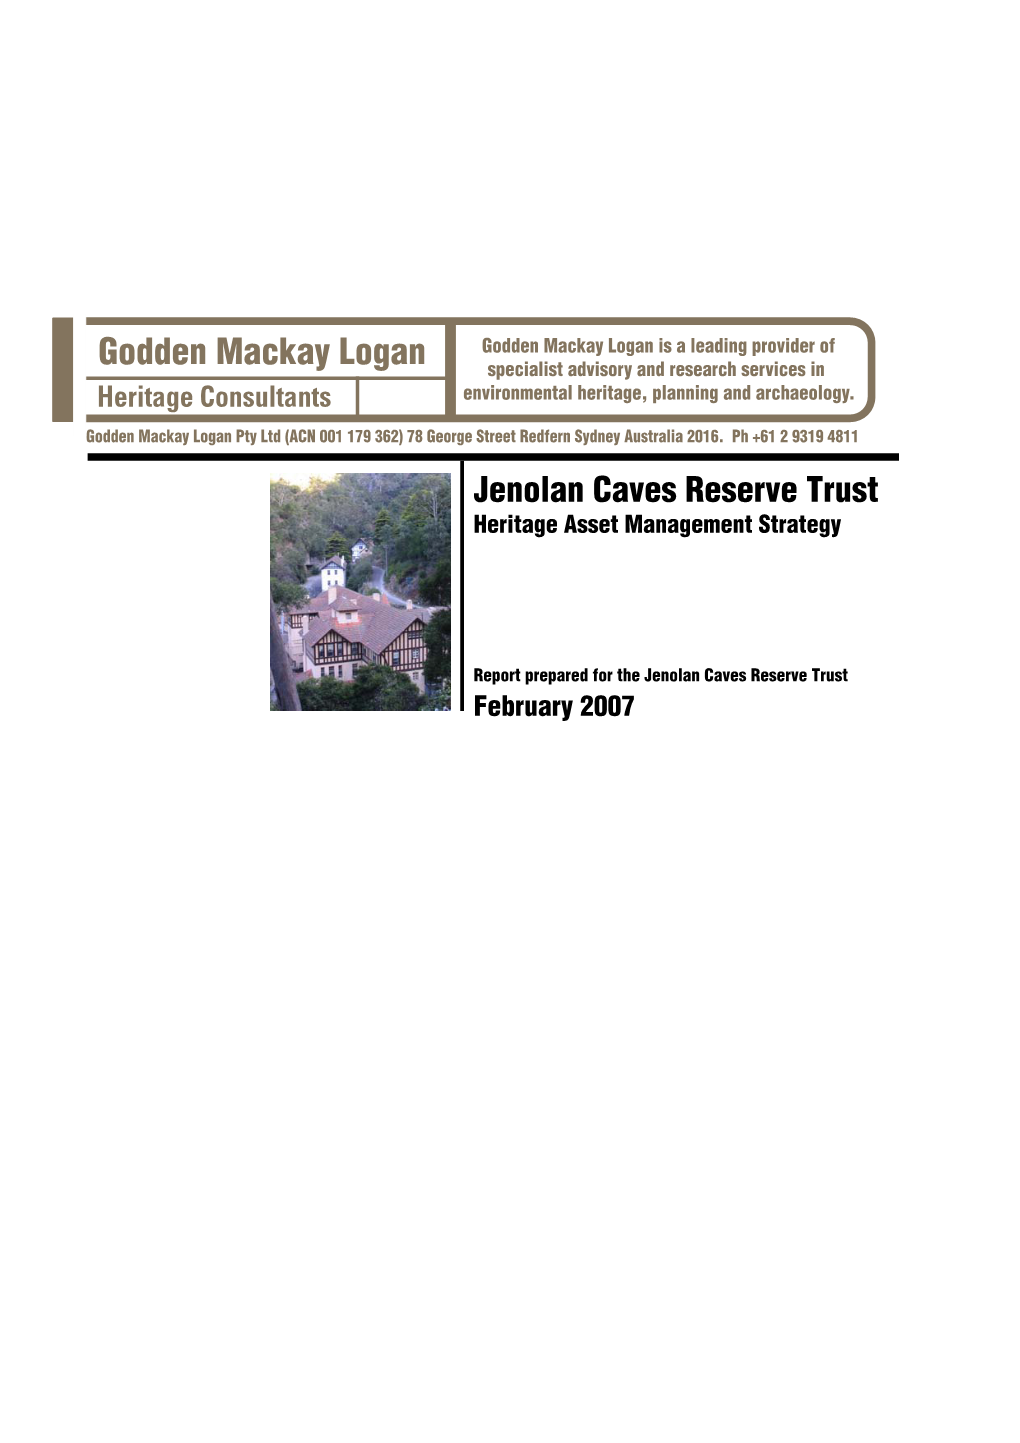 Jenolan Caves Heritage Asset Management Plan 2007